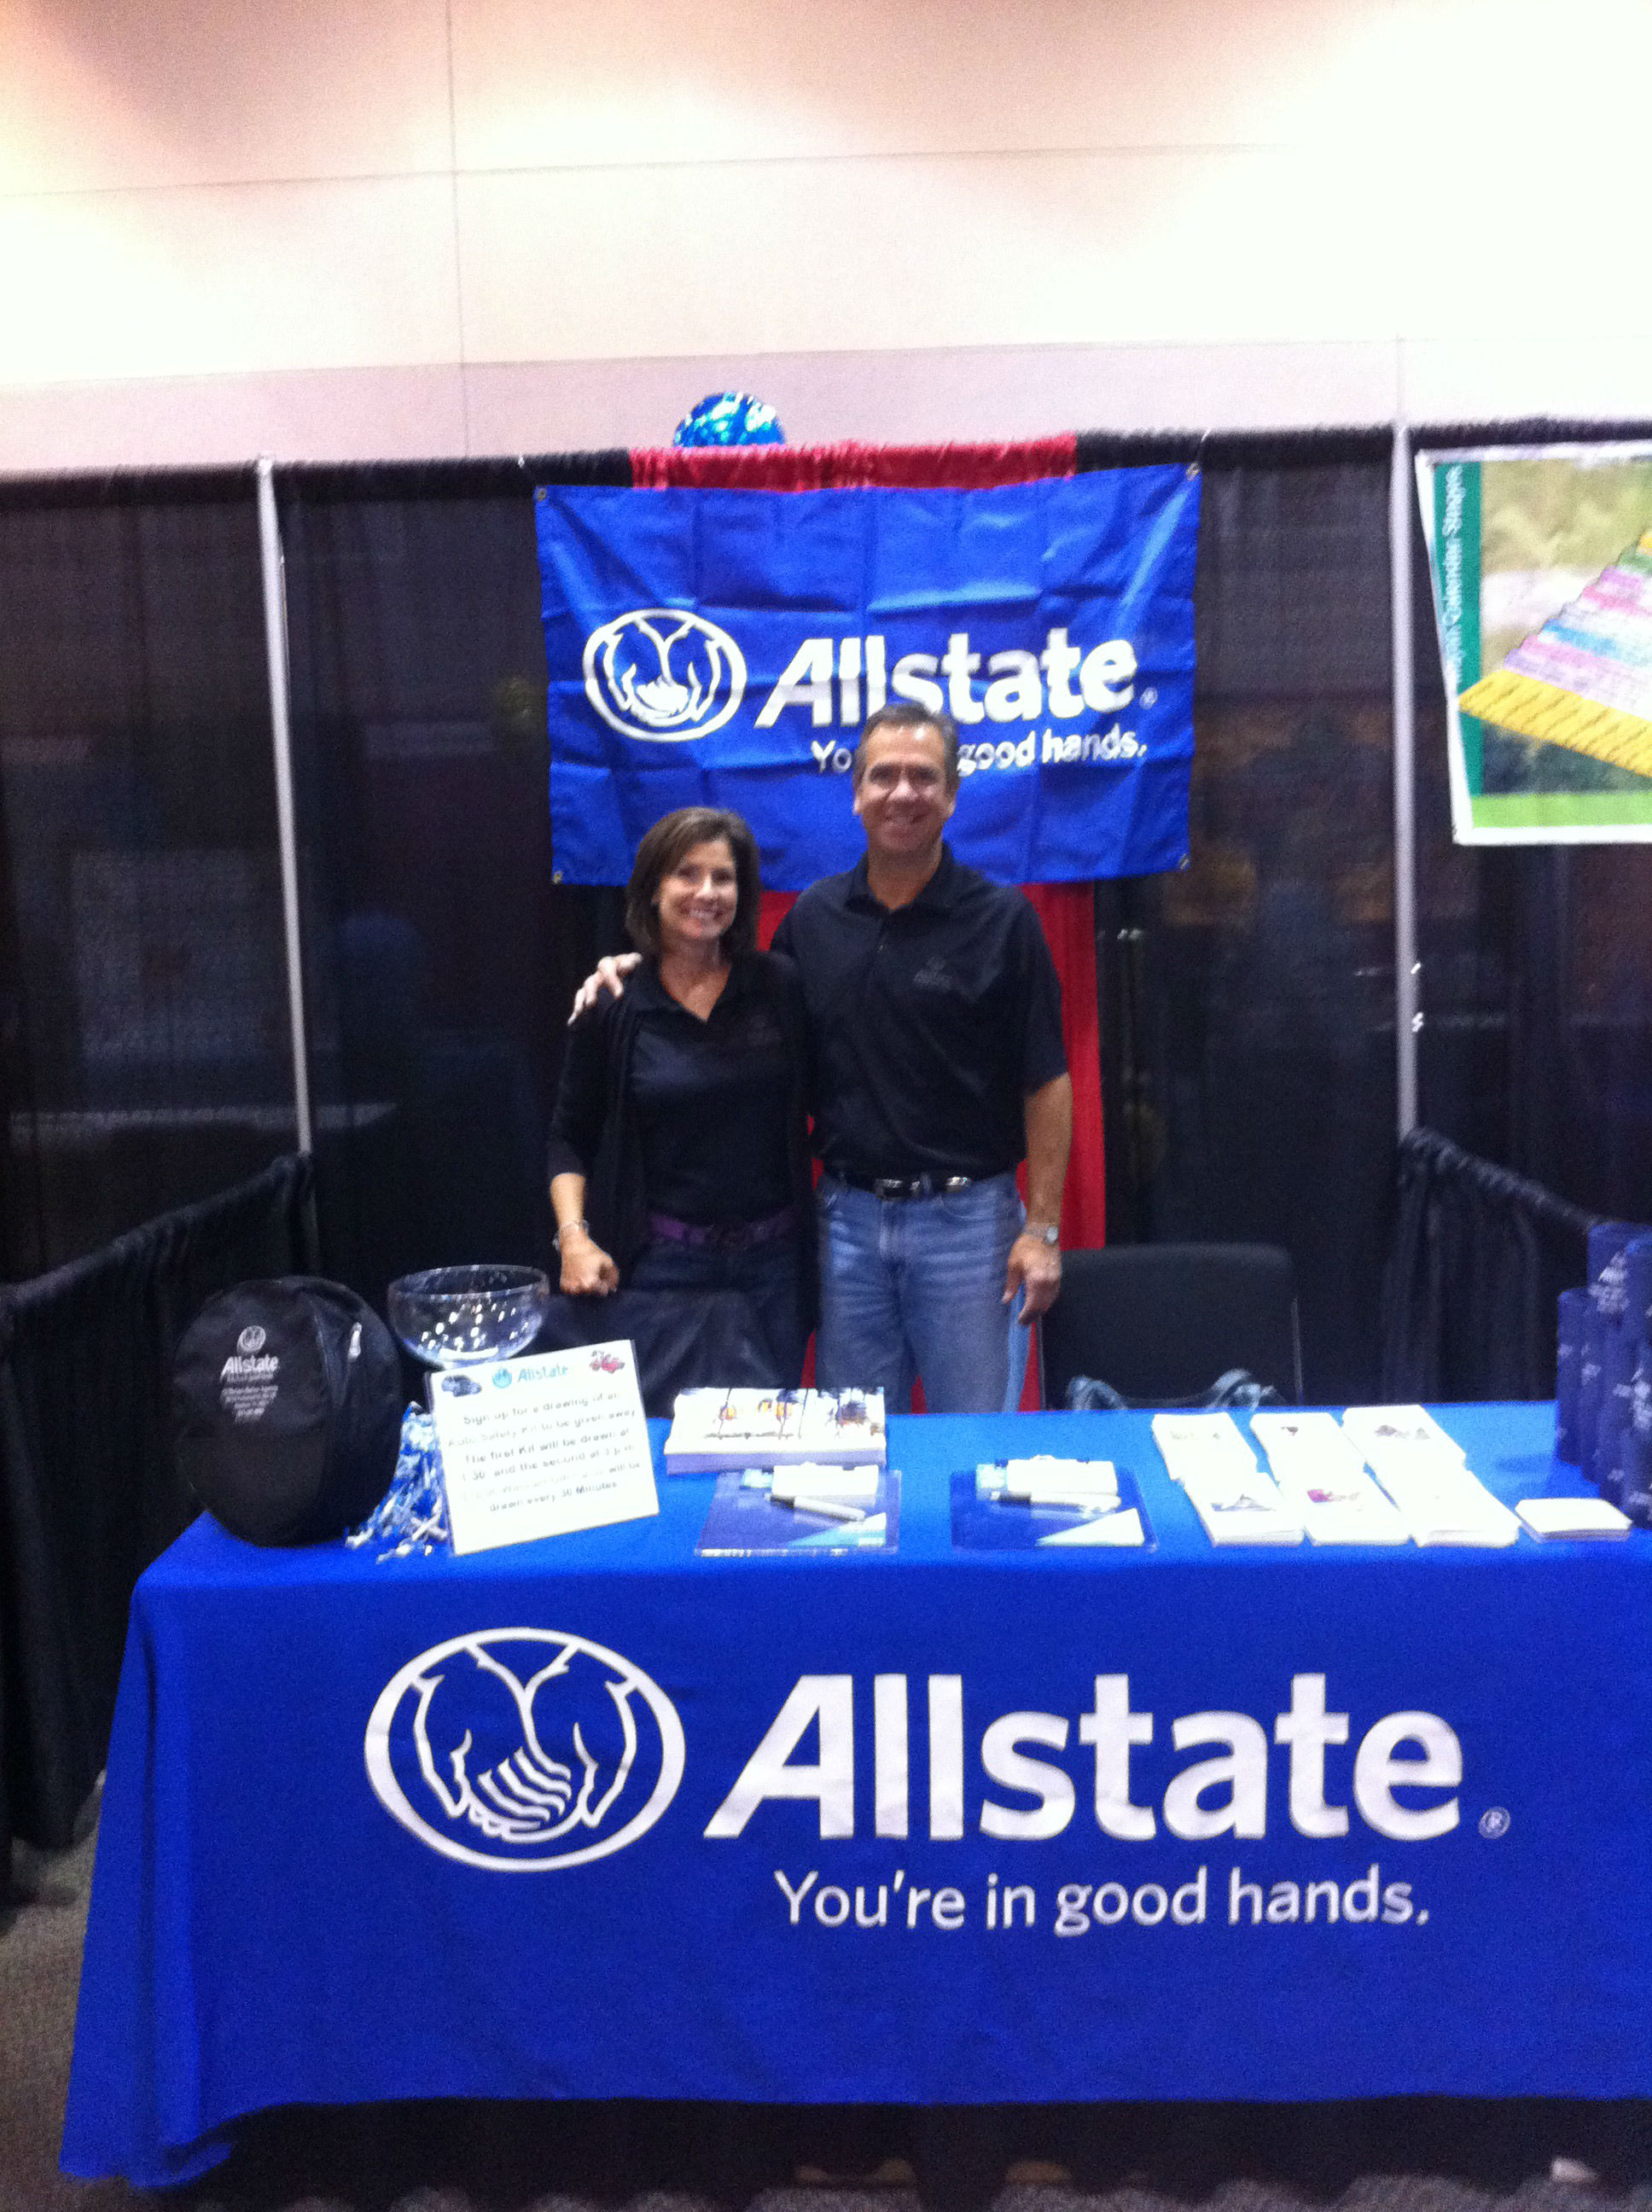 Alex Behar: Allstate Insurance Photo